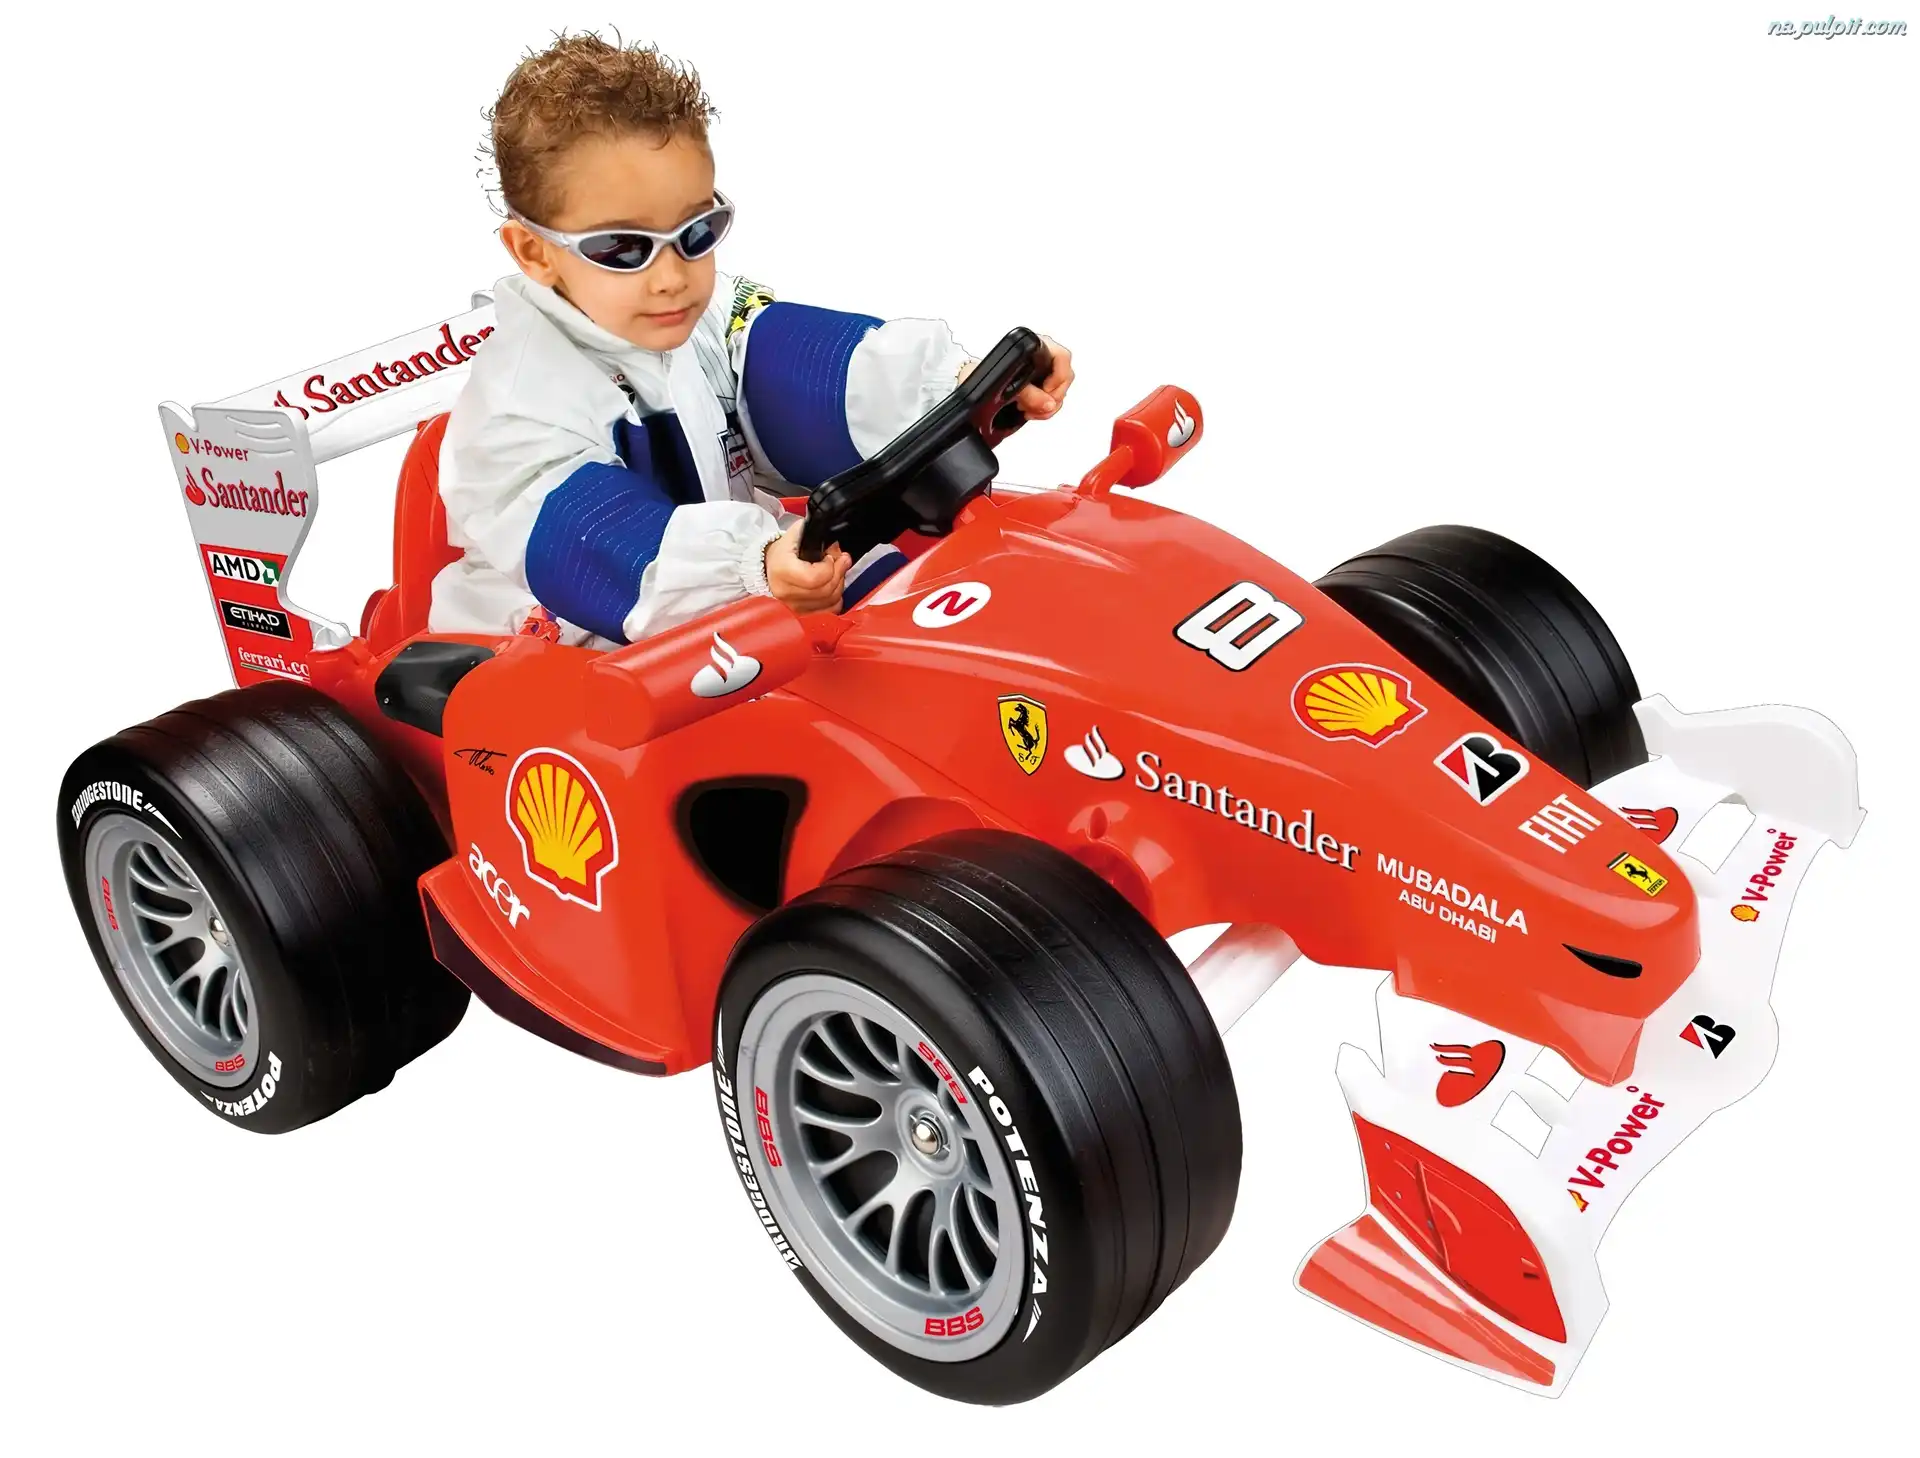 Ferrari, Samochód, Okulary, Dziecko, Zabawka